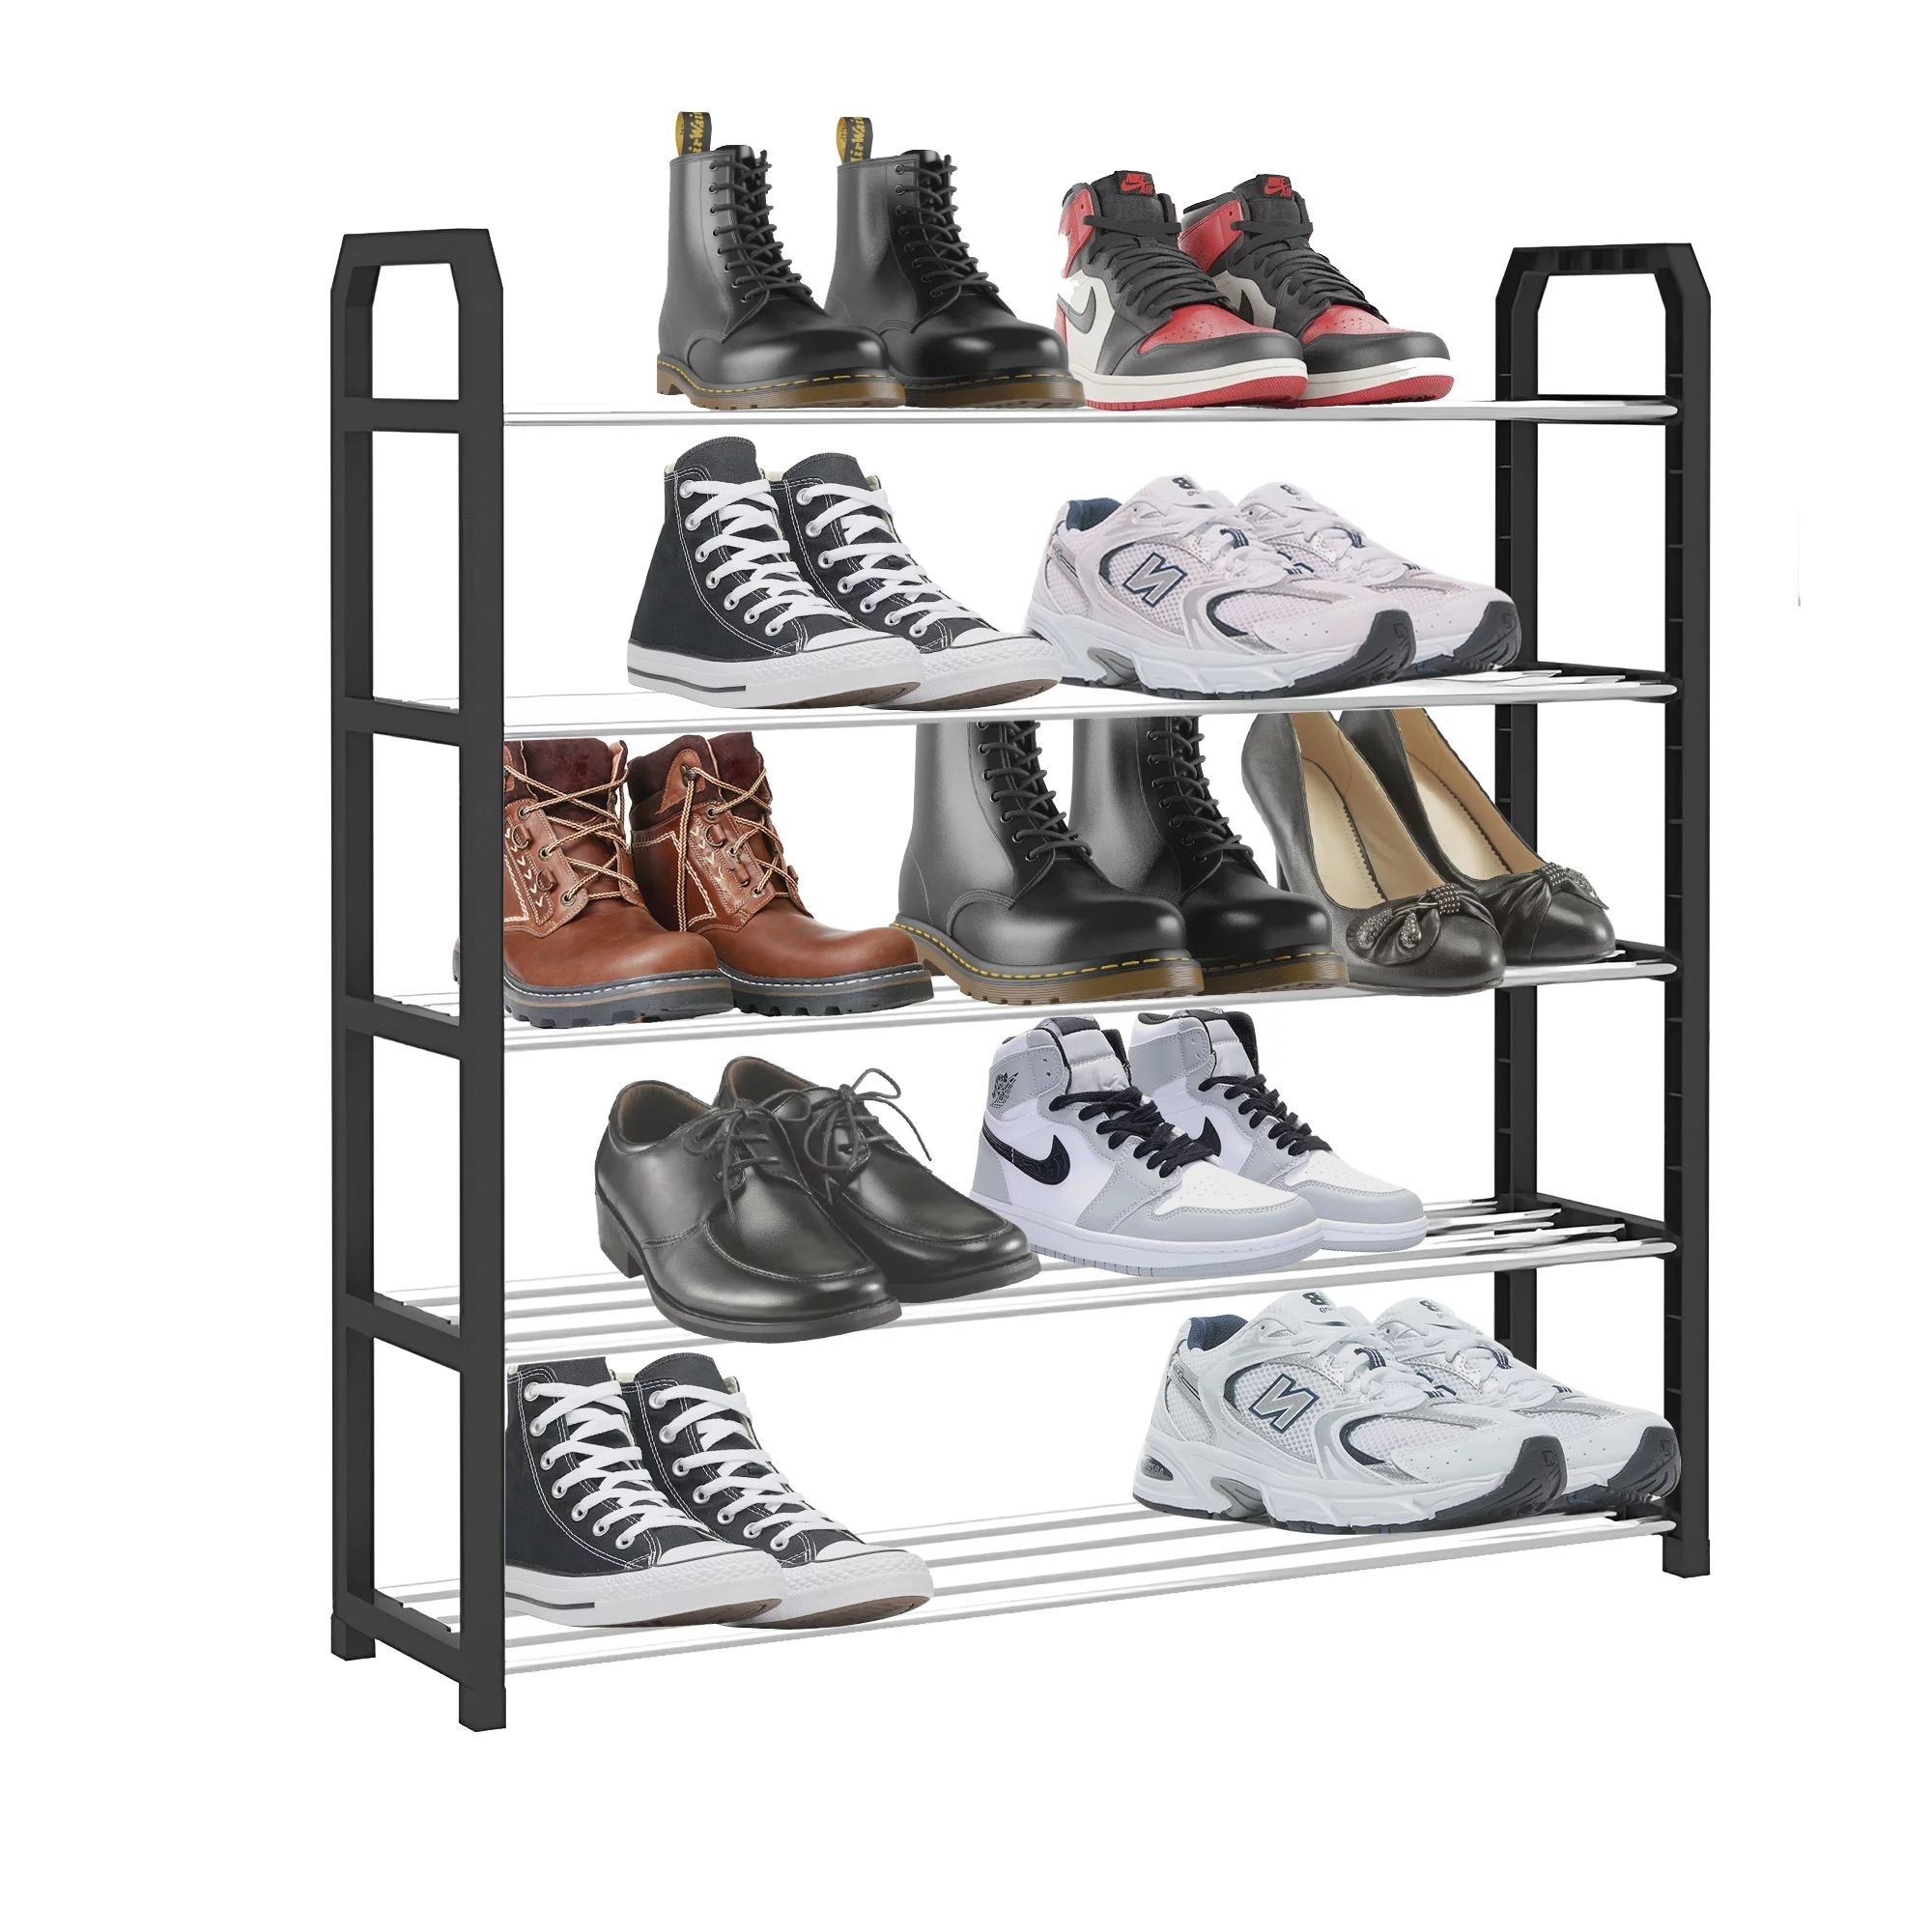 Hzuaneri Shoe Rack，8 Tier Narrow Shoe Shelves, Shoe Organizer